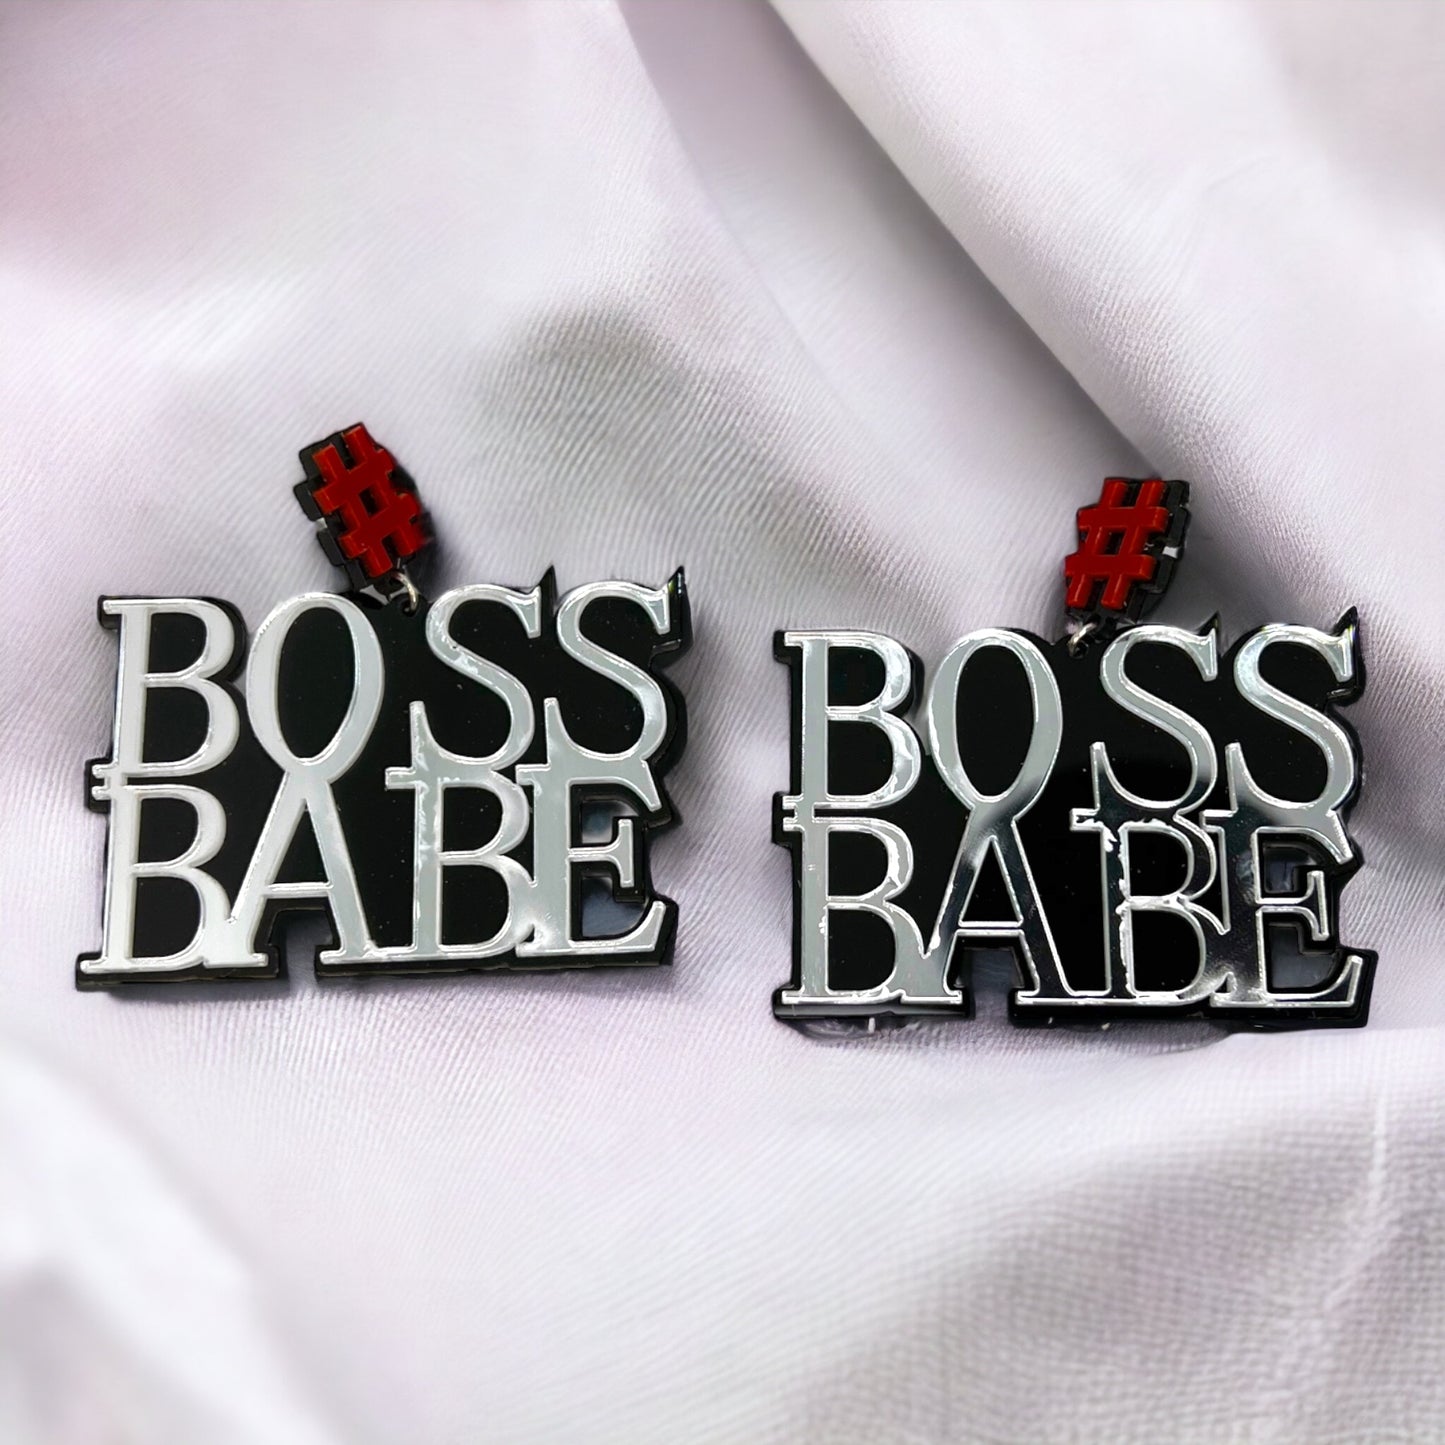 Boss Babe Earrings - Sassy Earrings, Fun Earrings, Sweet and Sassy, Girl Power